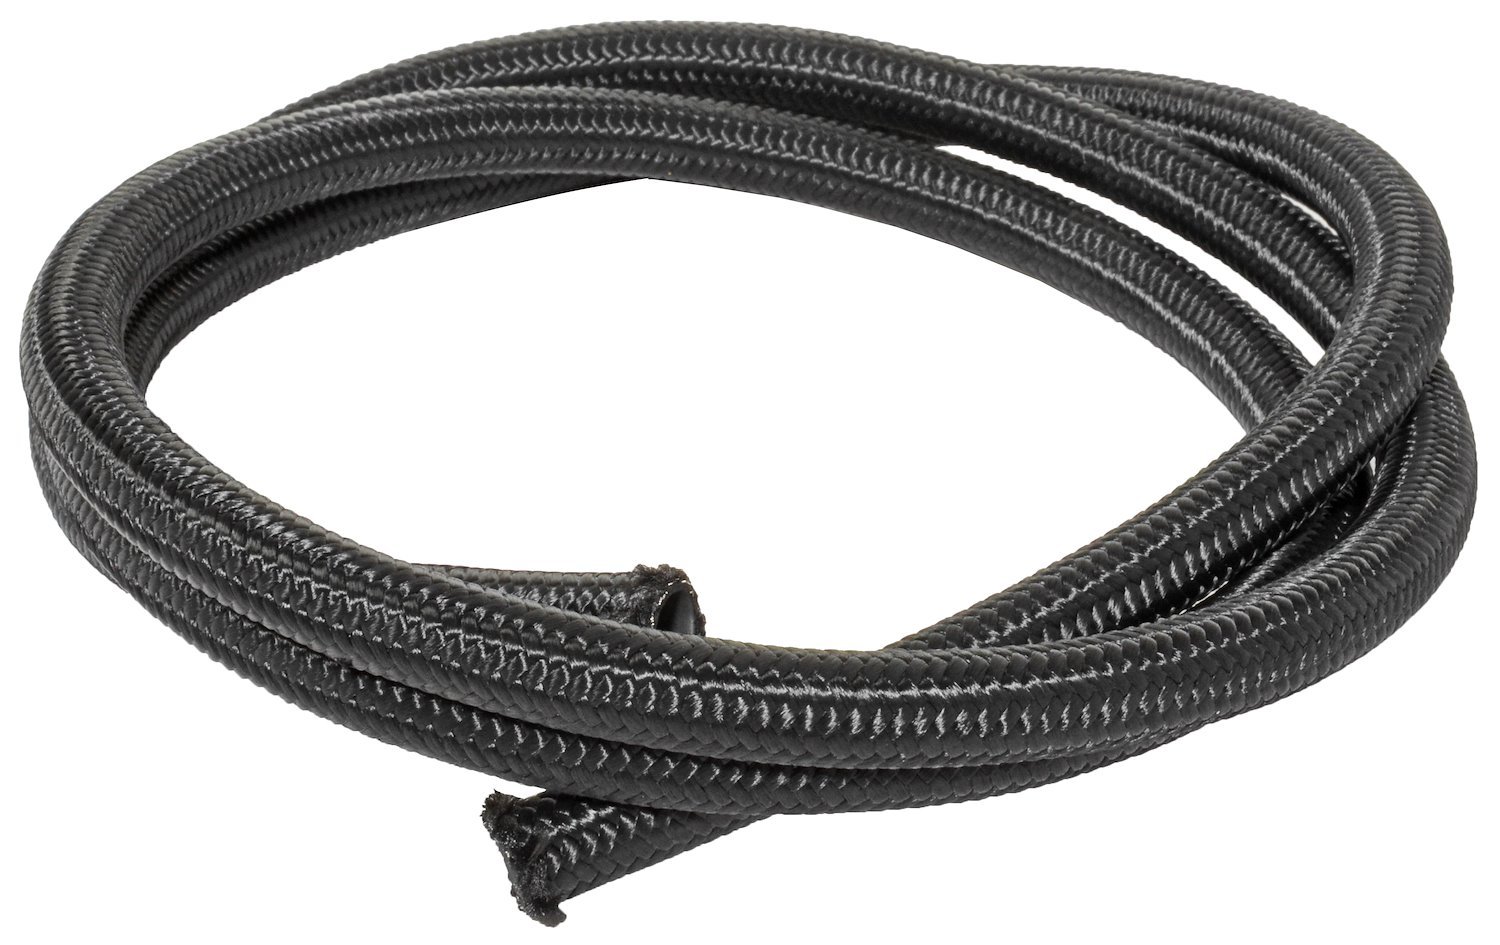 Pro-Flo 350 Black Nylon Braided Hose [-6 AN, 20 ft]